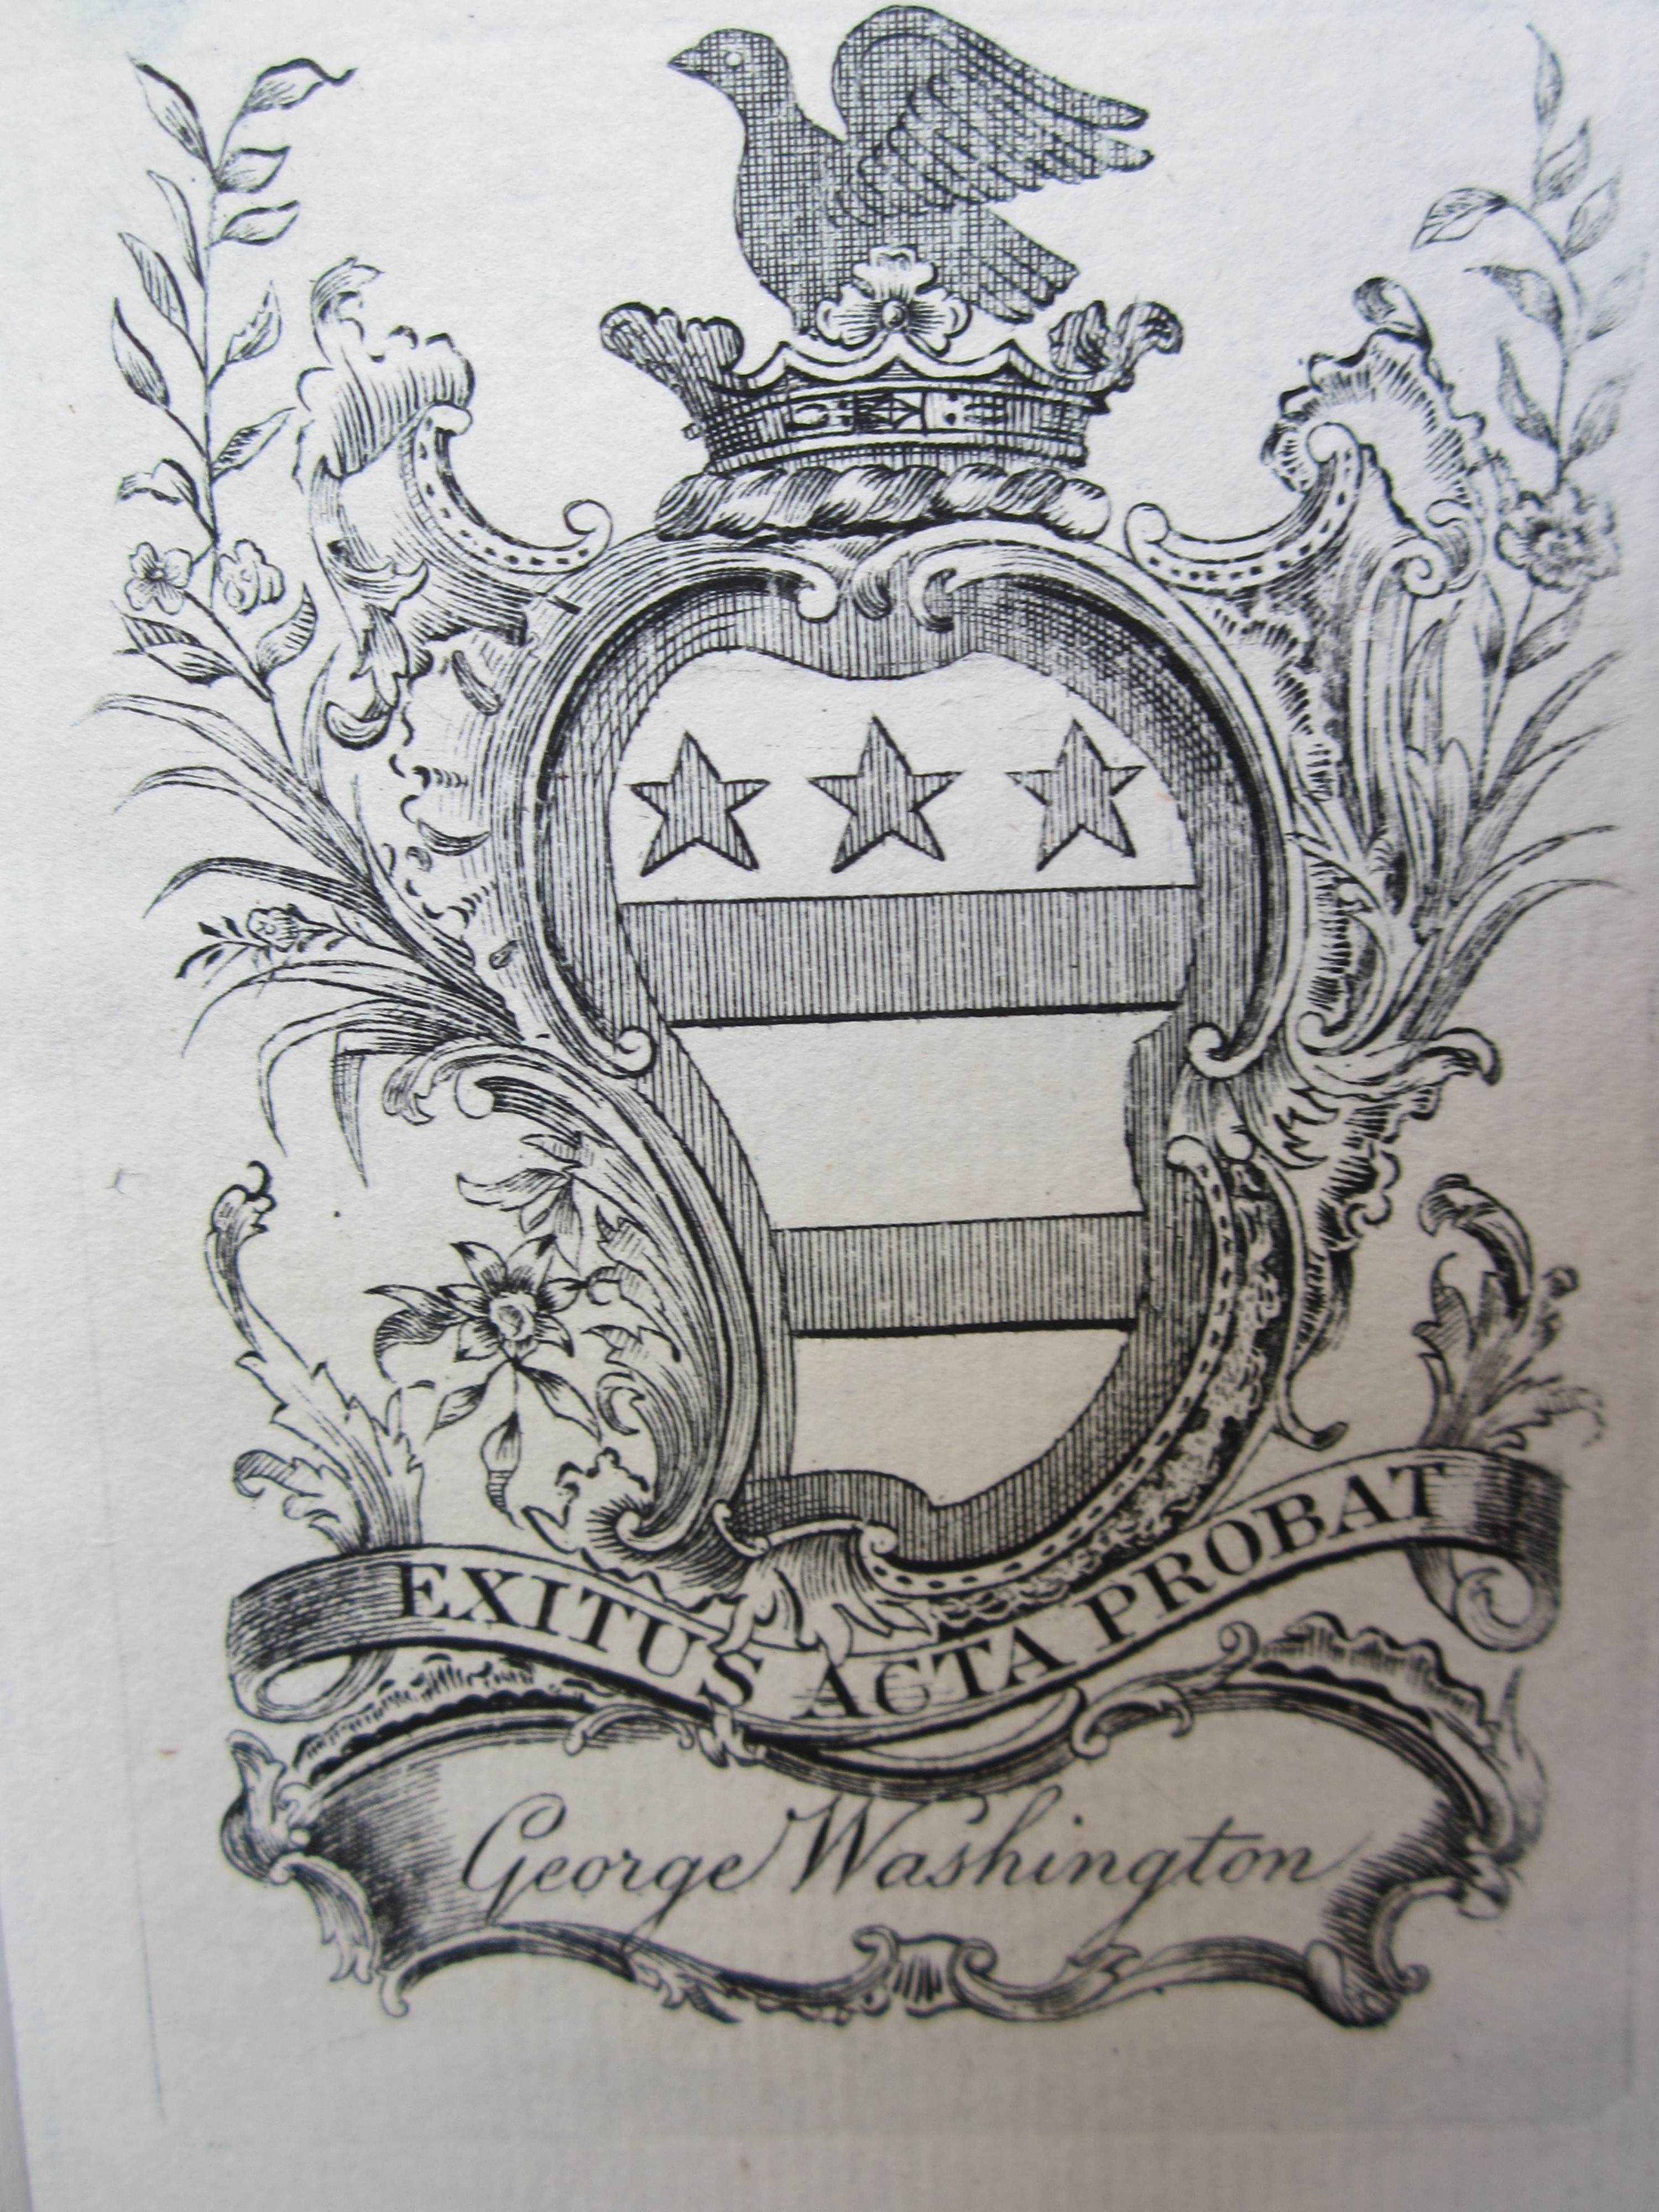 Washington's bookplate